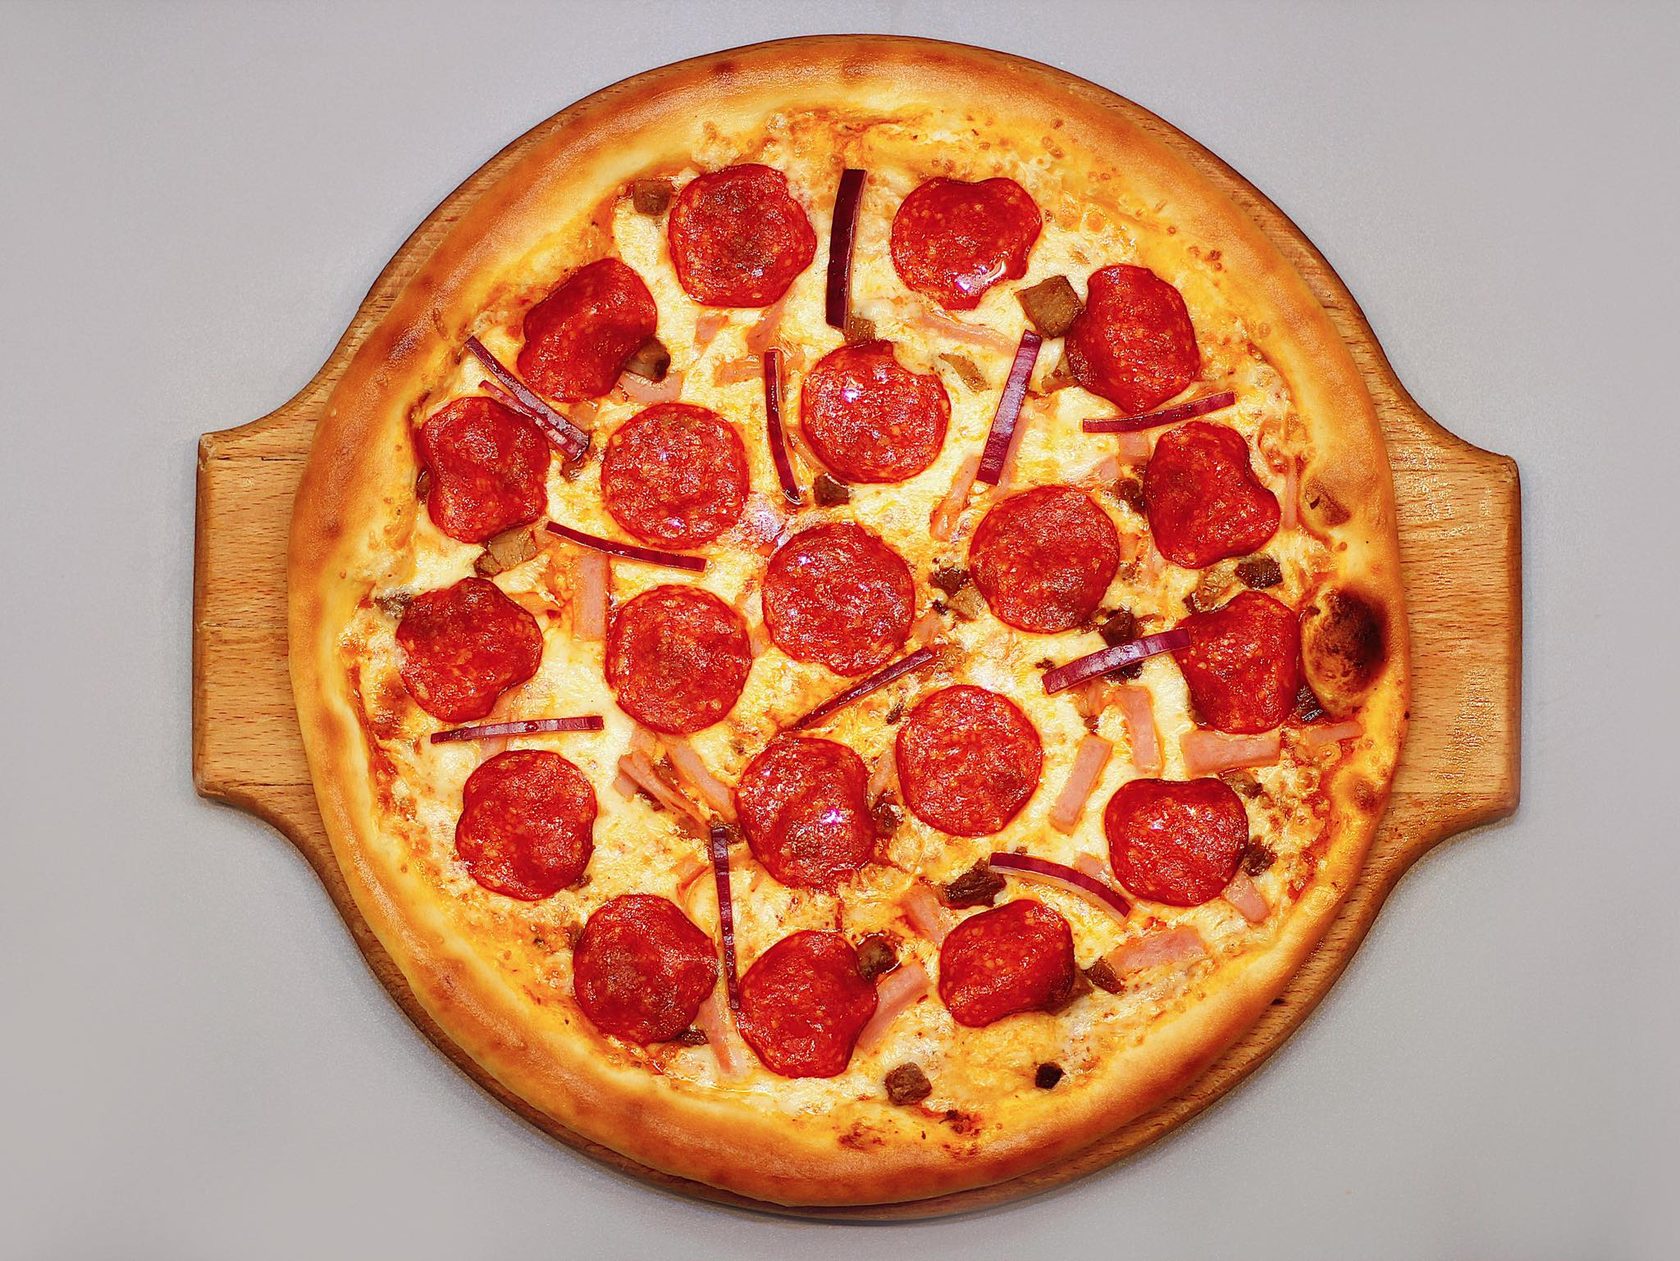 сколько стоит пицца пепперони в москве фото 117